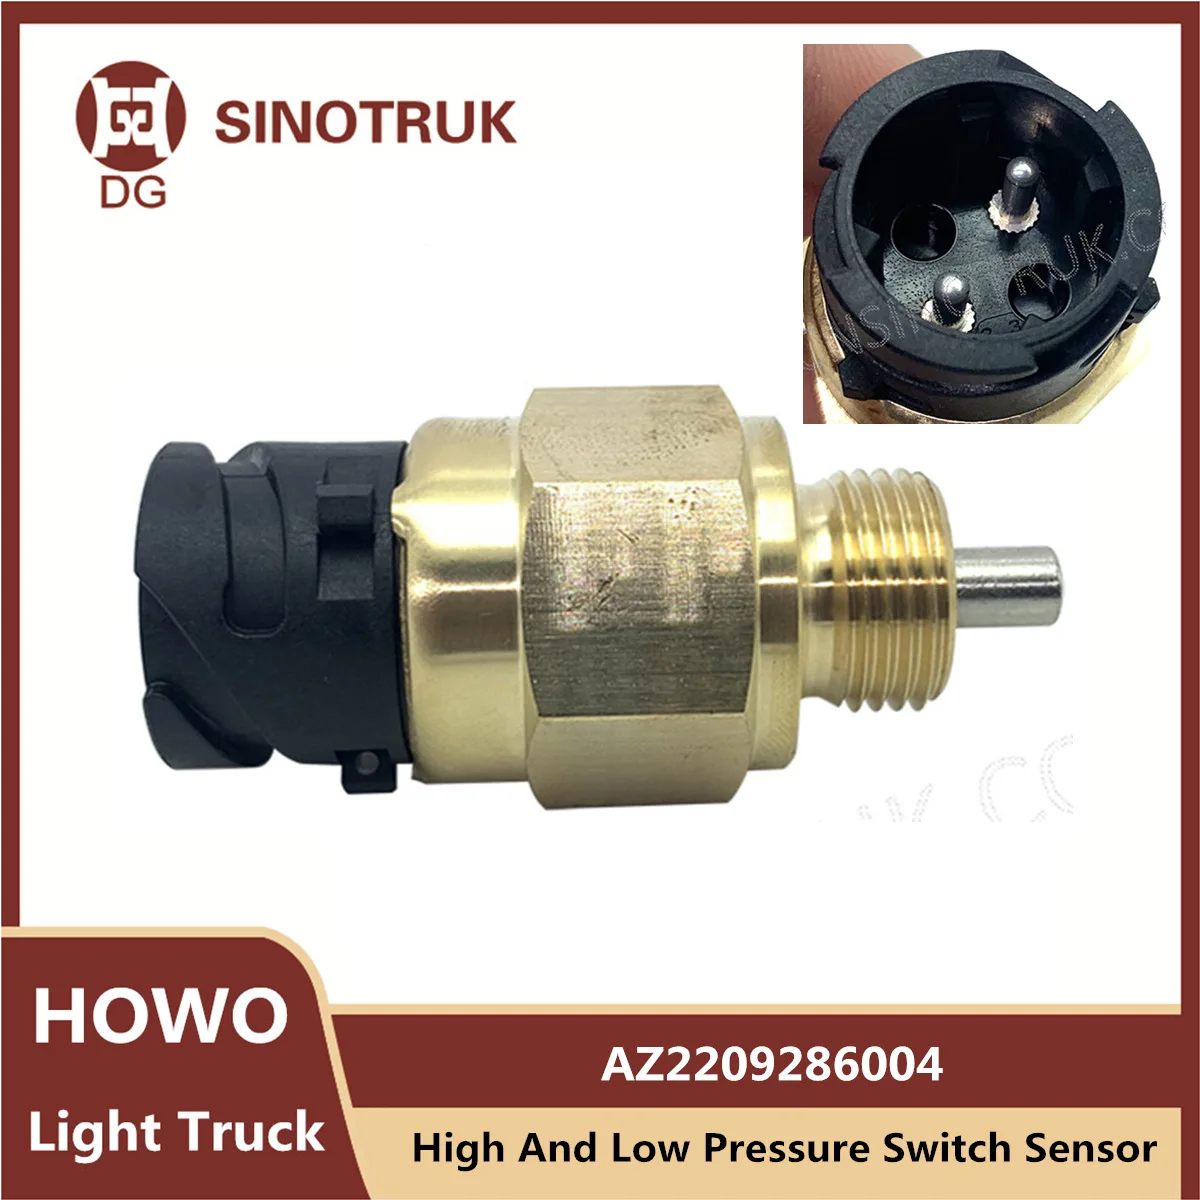 

High And Low Pressure Switch Sensor AZ2209286004 For Sinotruk Howo Light Truck Sensor Induction Plug Original Truck Parts